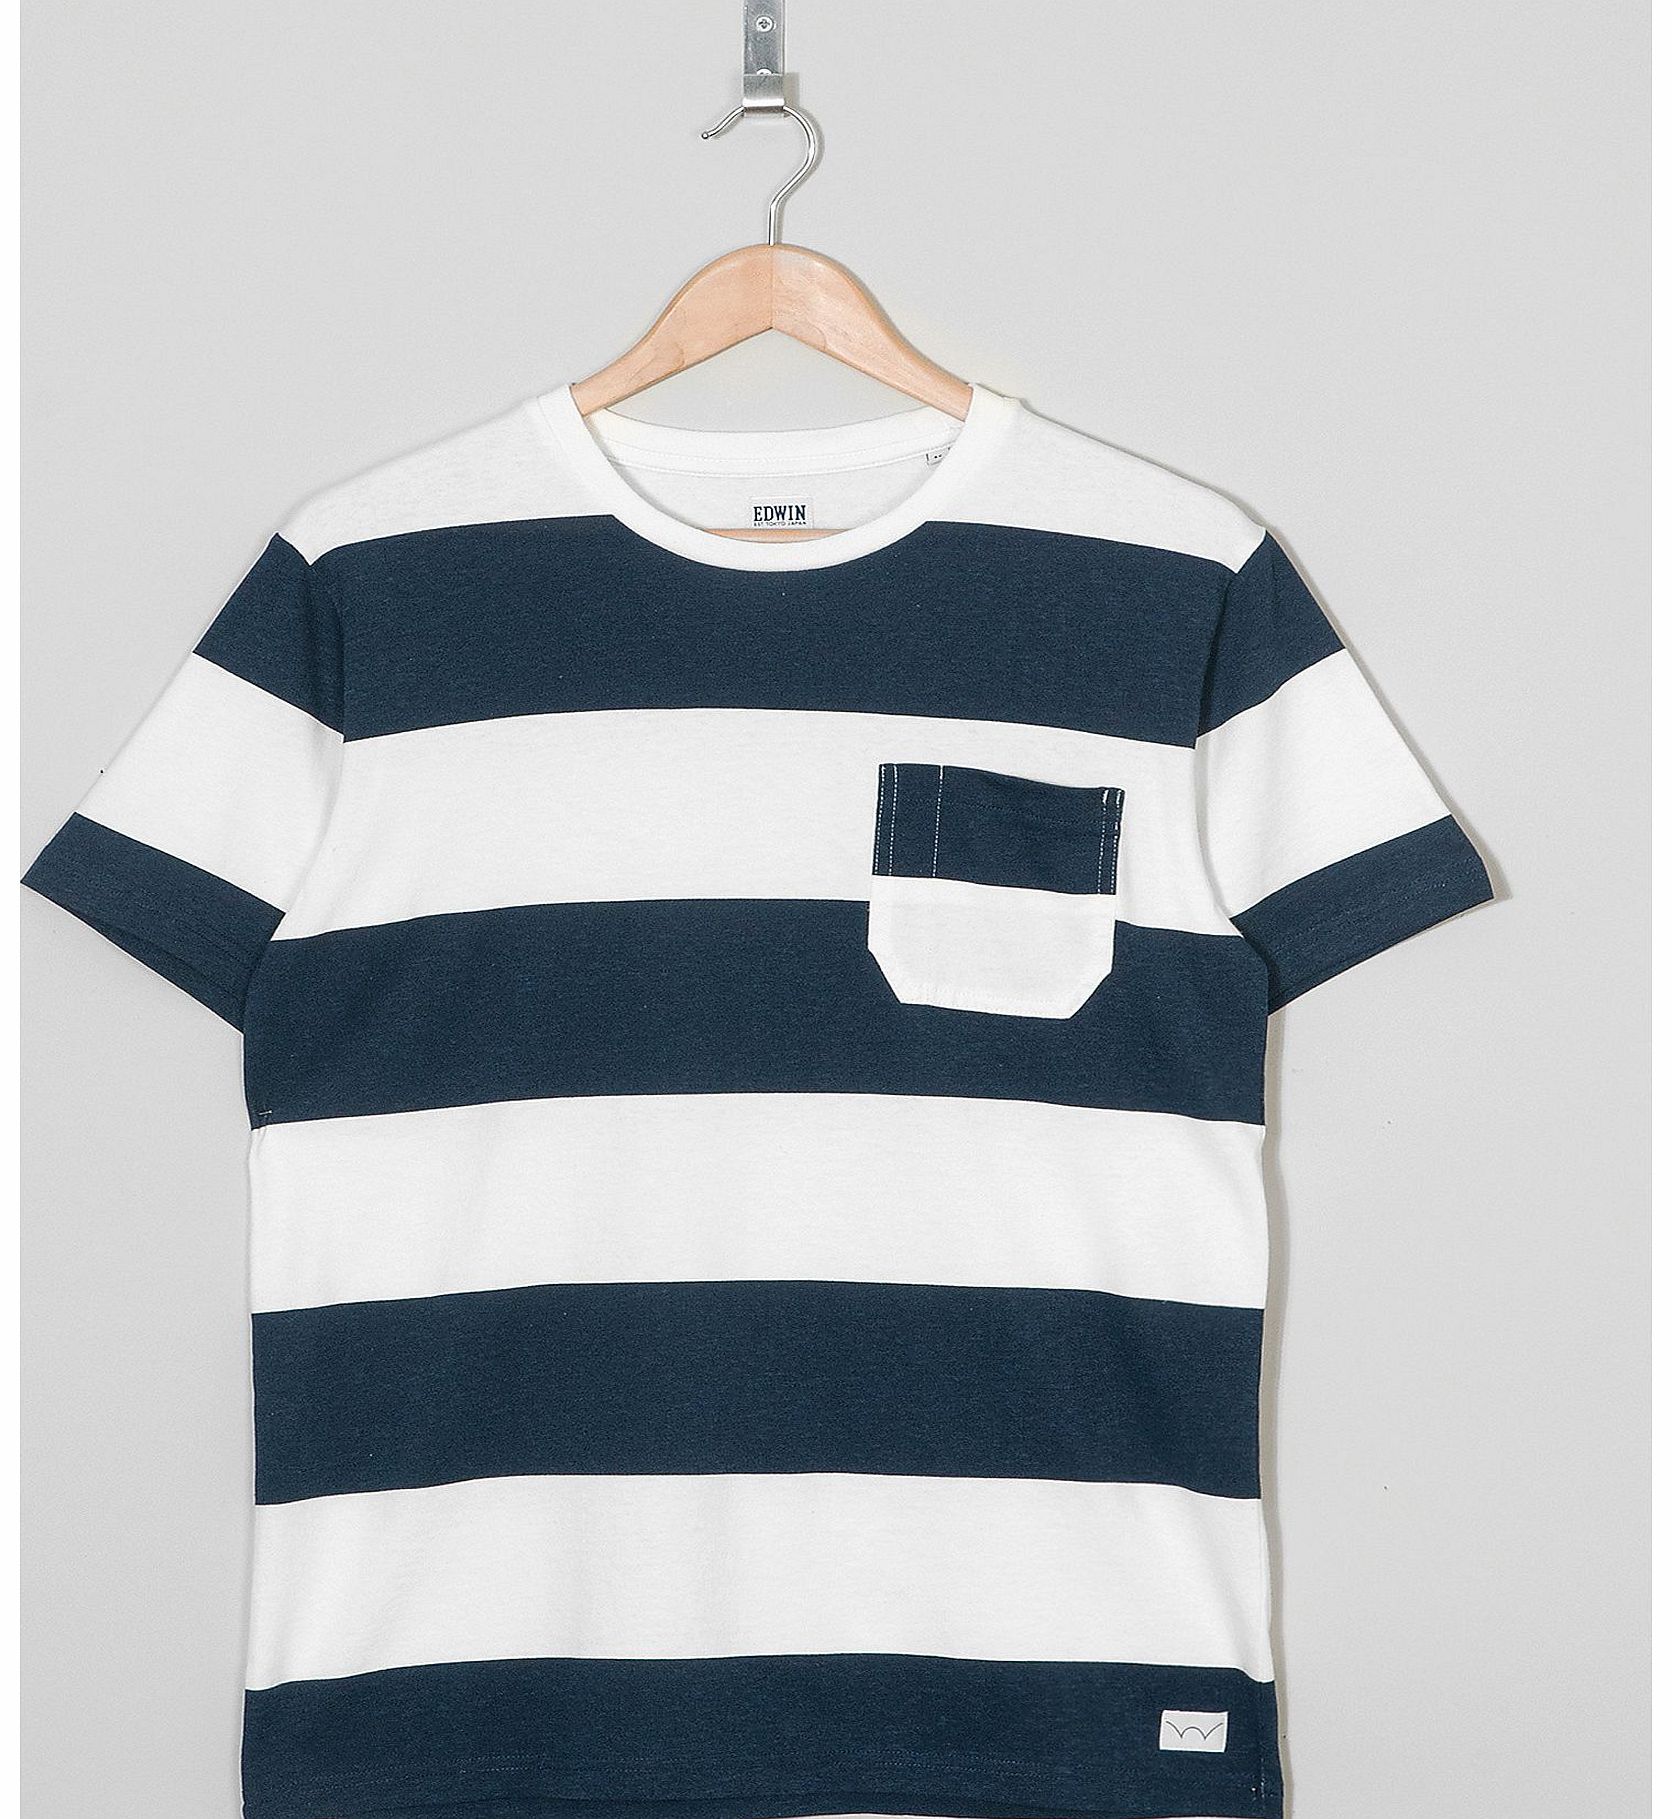 Edwin Marvin Striped T-Shirt